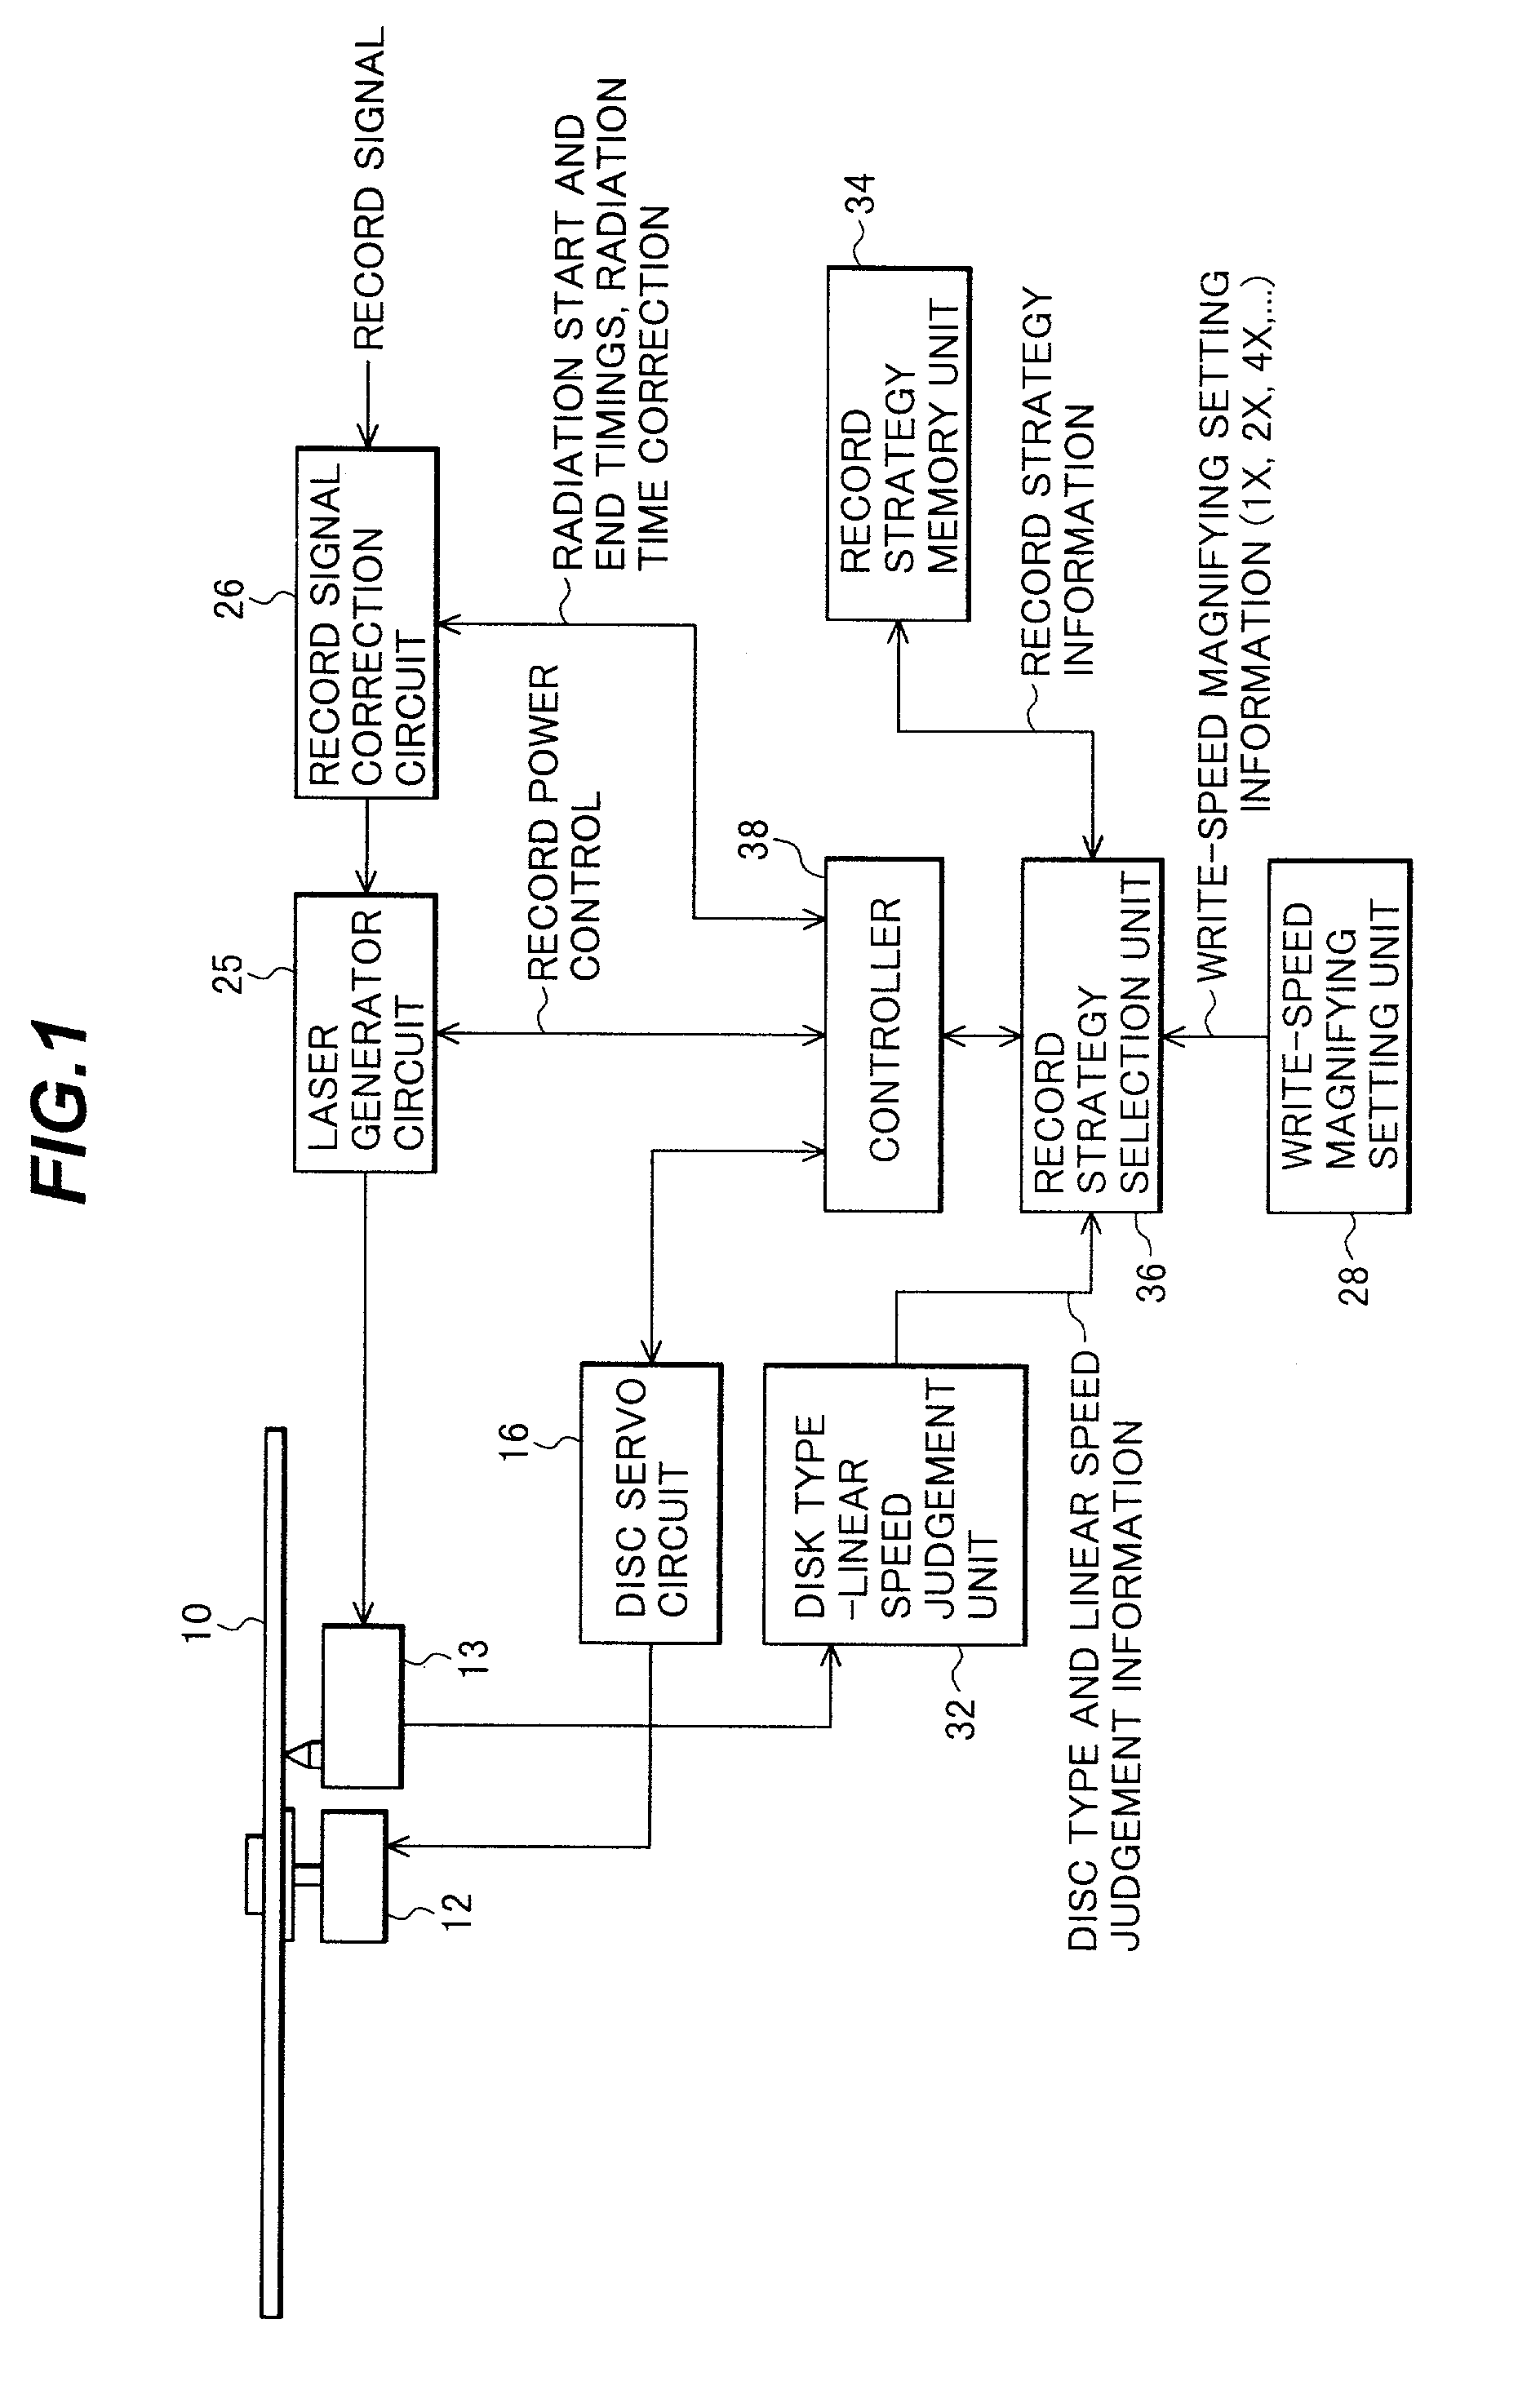 Optical disc recording method and apparatus